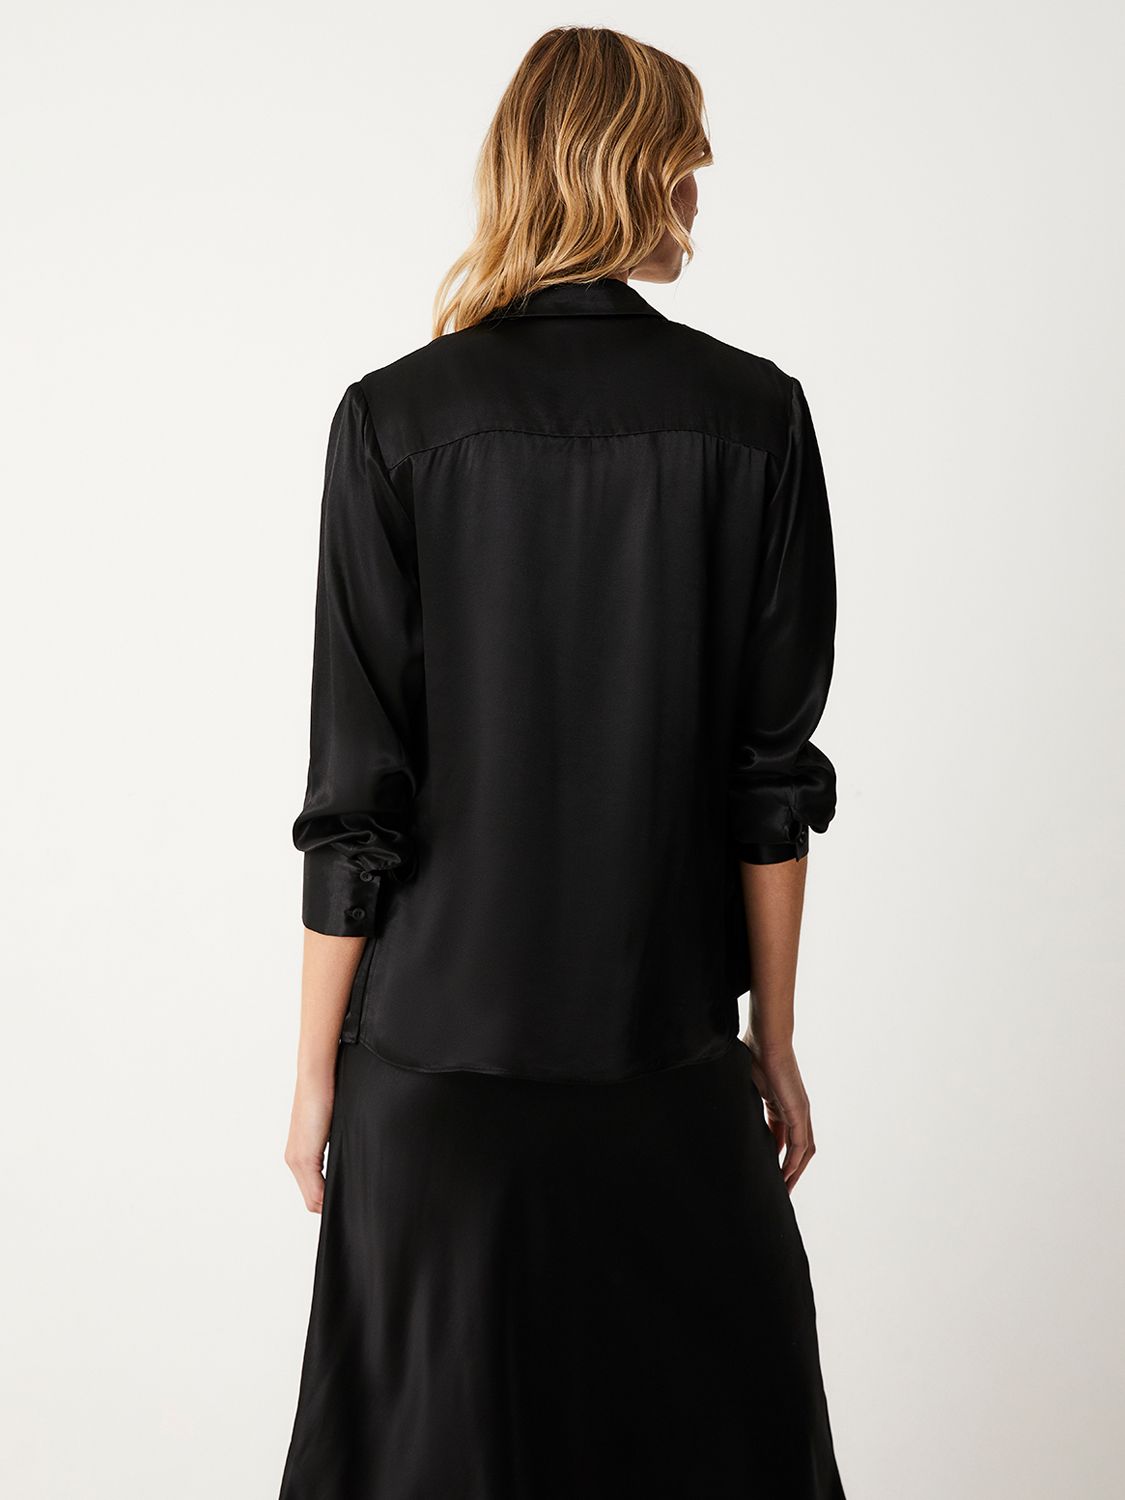 Finery Cynthia Satin Shirt, Black at John Lewis & Partners